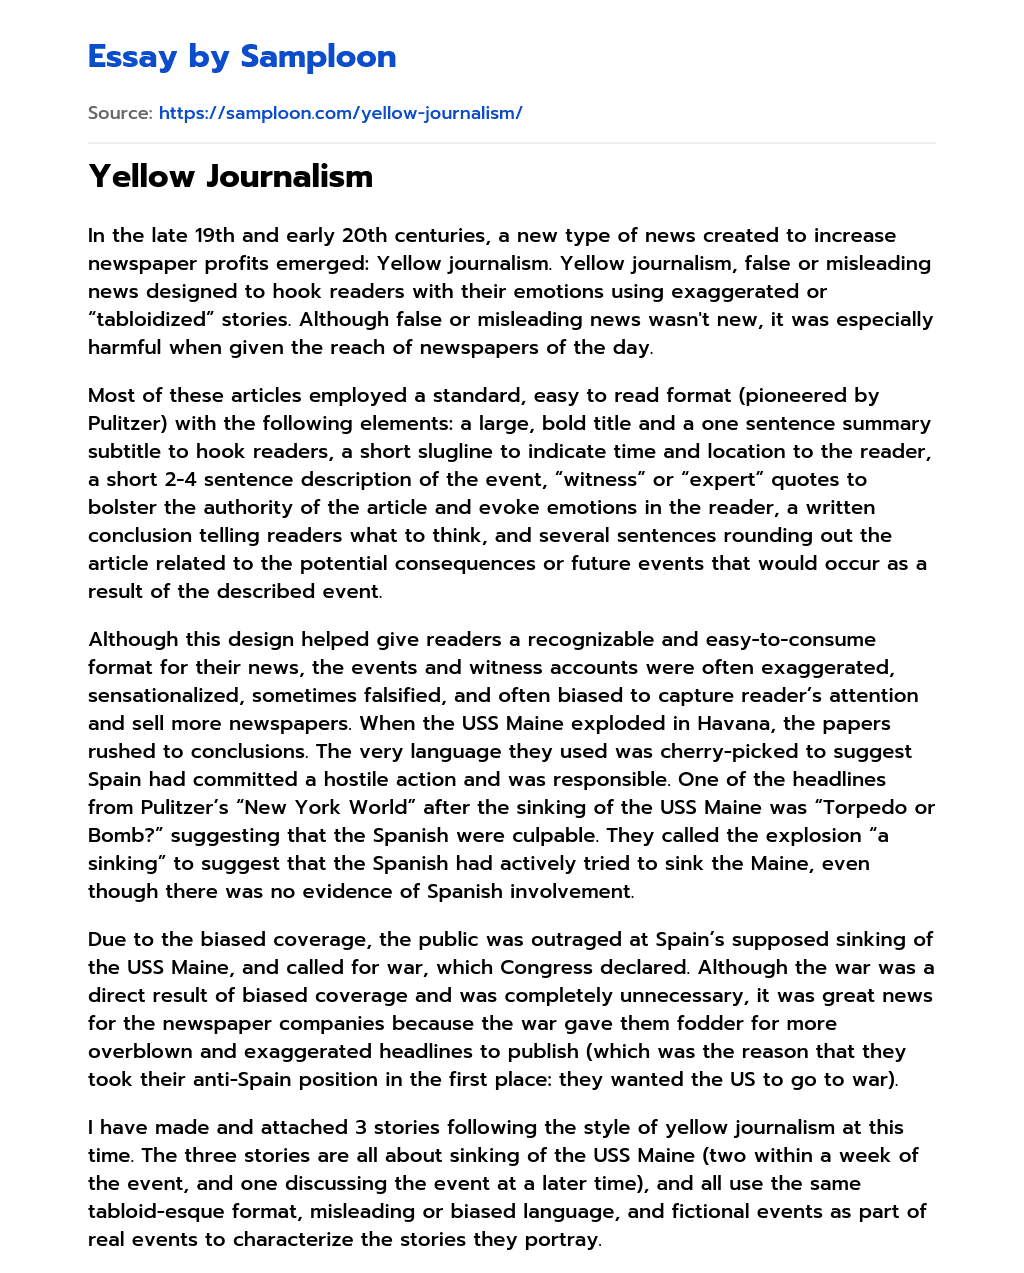 Yellow Journalism essay